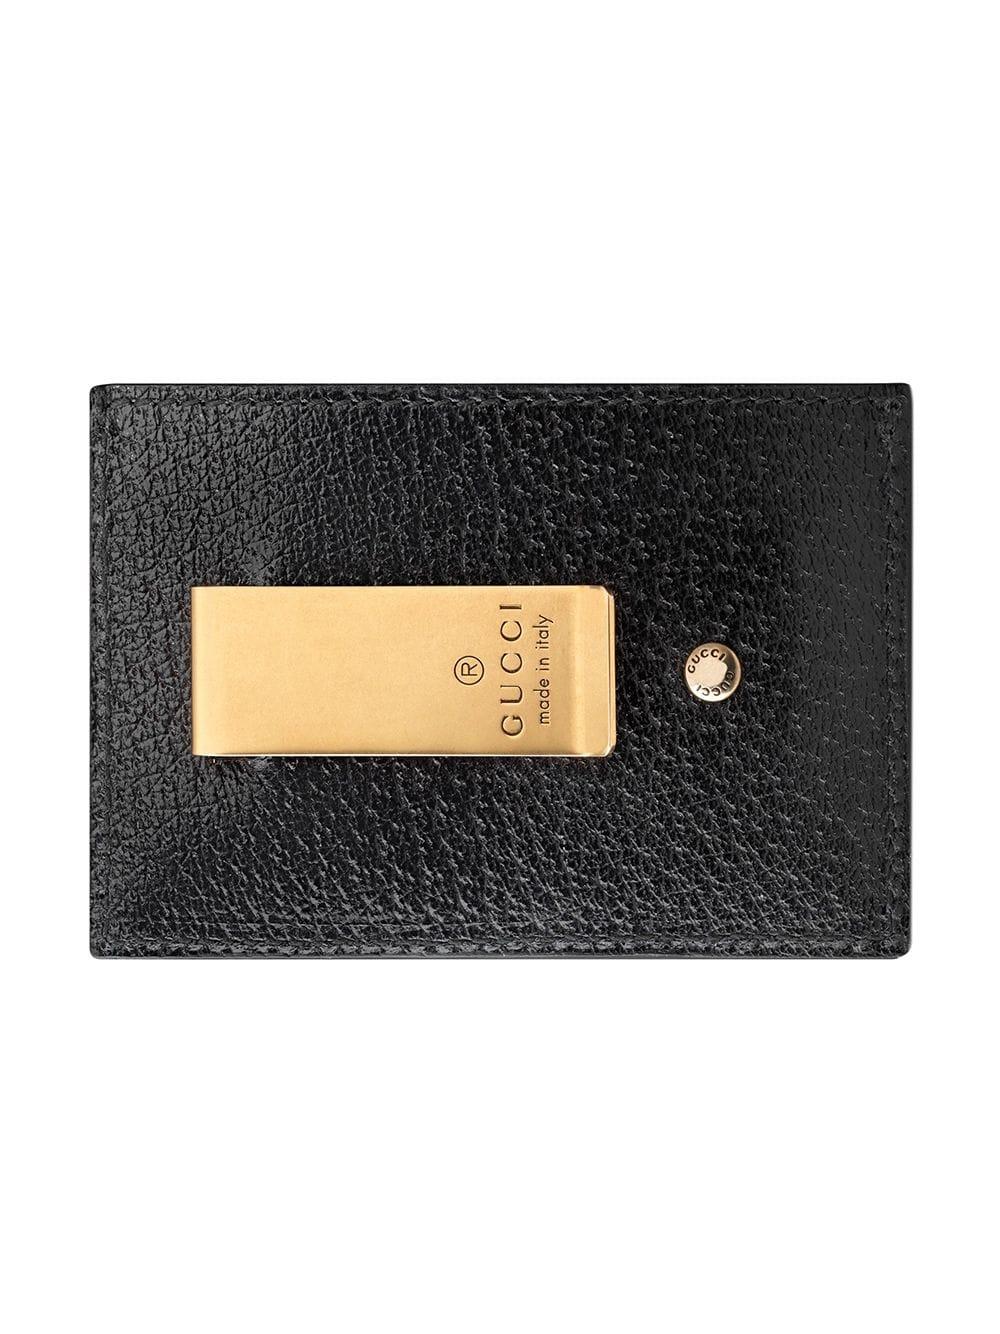 Authentic GUCCI Leather Card Case Money Clip Leather Black GG Bill Crip  Men's